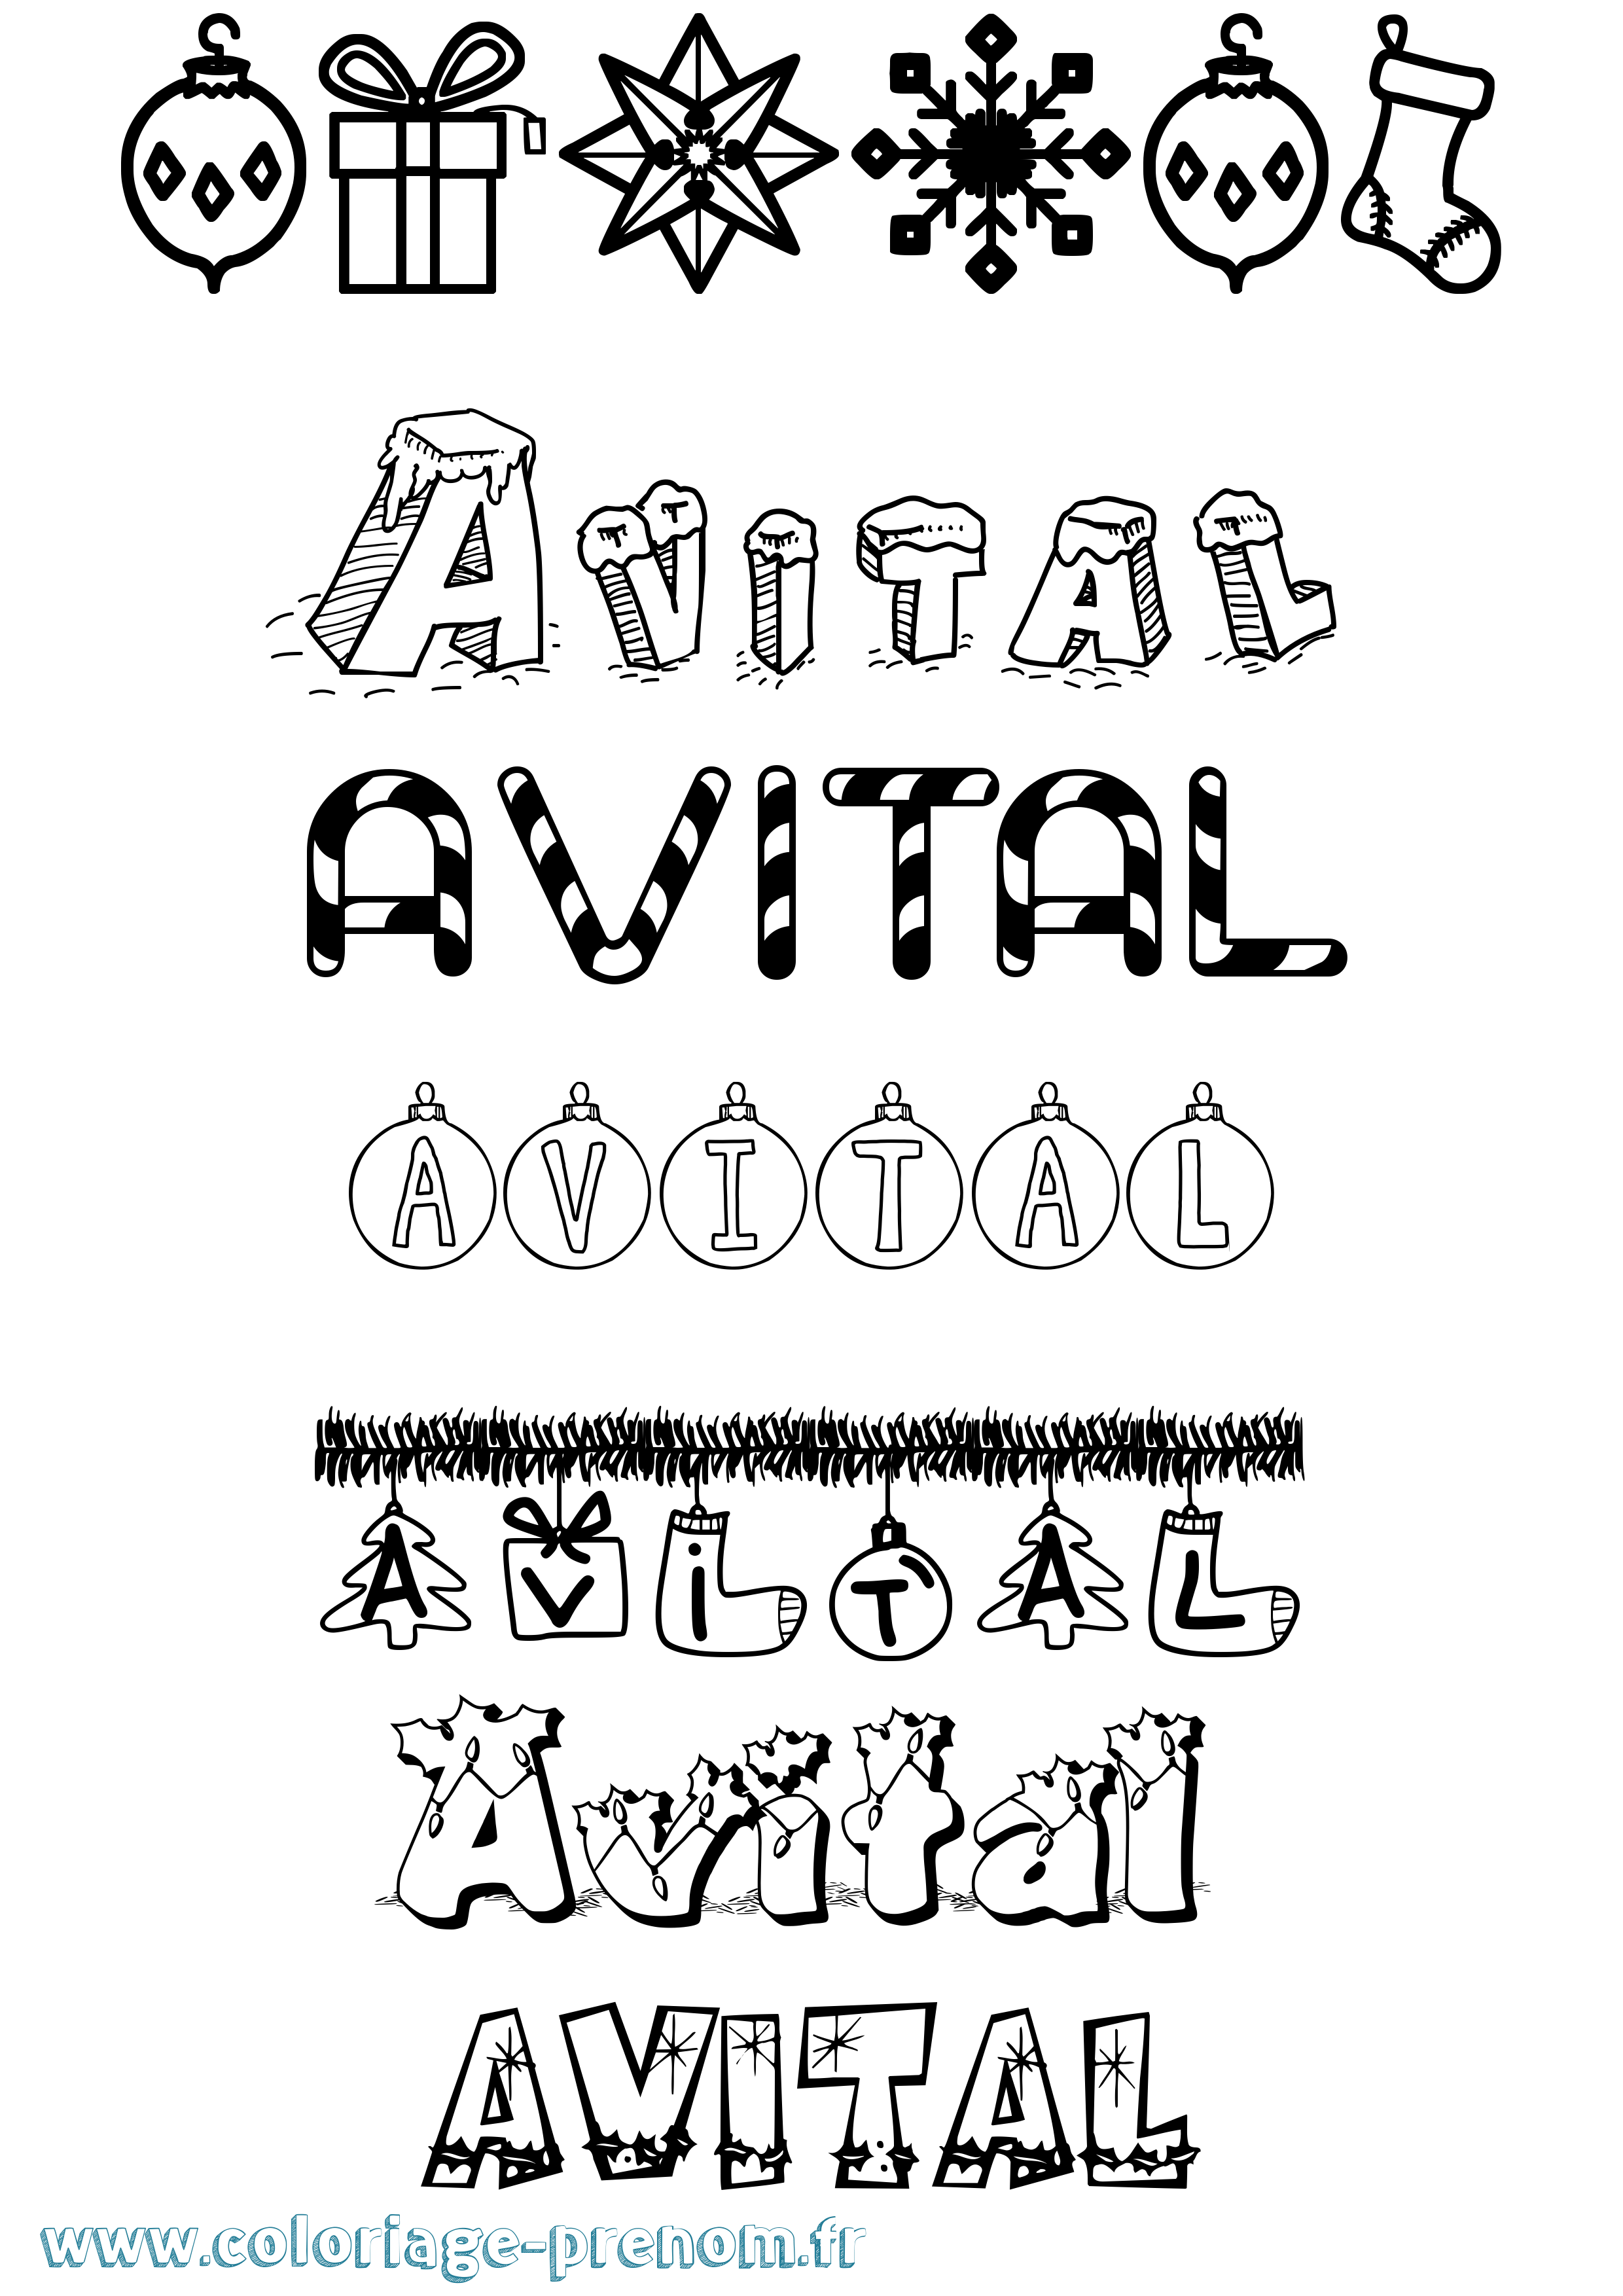 Coloriage prénom Avital